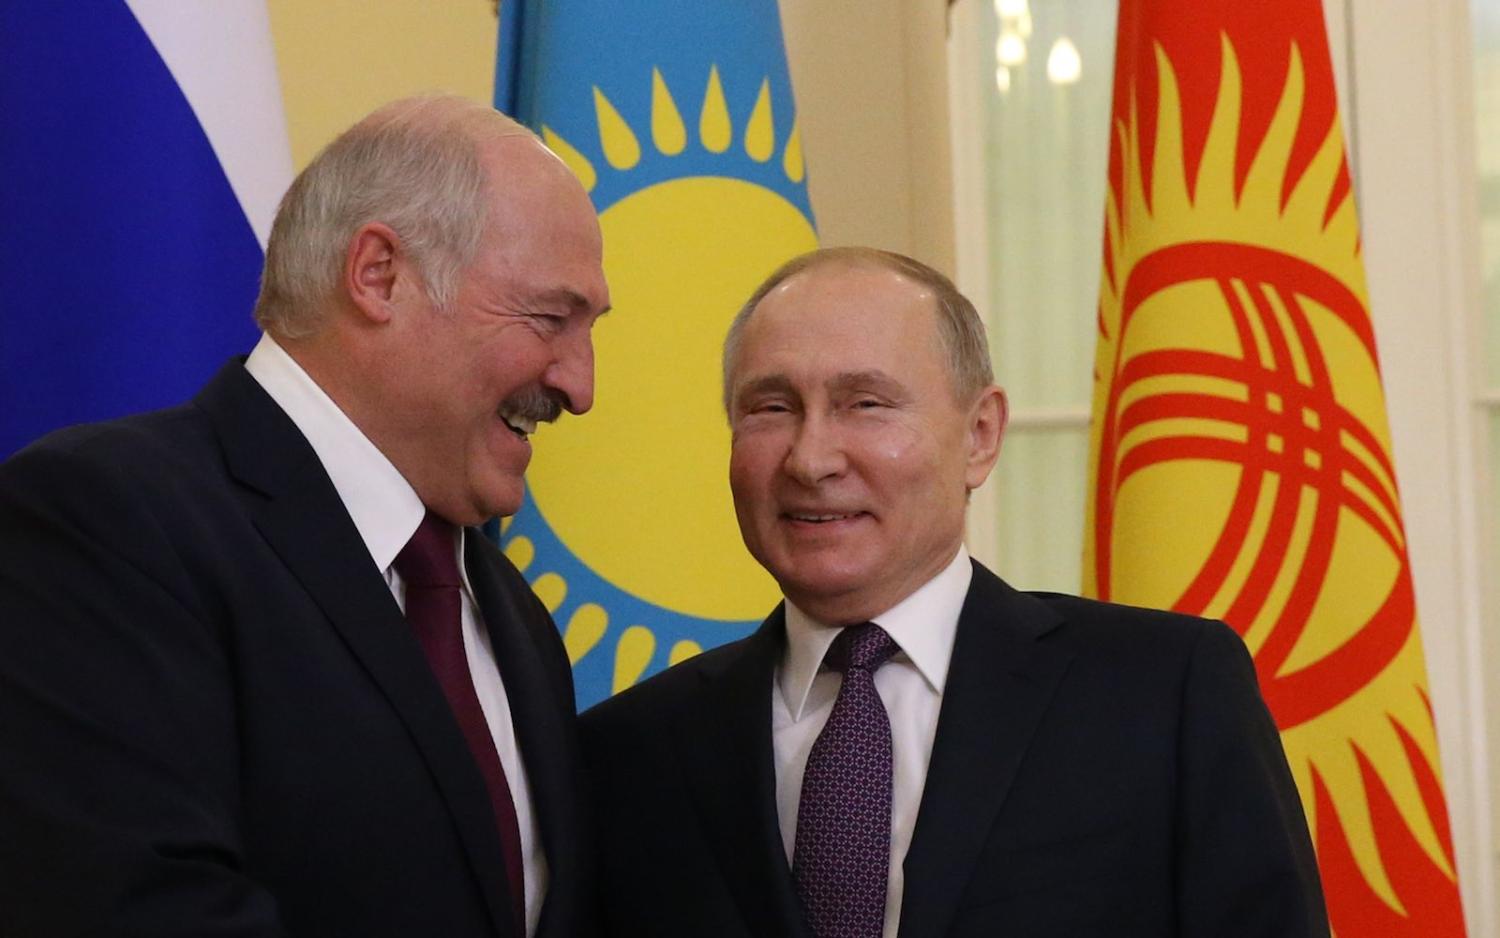 Belarusian President Alexander Lukashenko (left) with Russian President Vladimir Putin, Saint Petersburg, Russia, 20 December 2019. (Mikhail Svetlov/Getty Images)